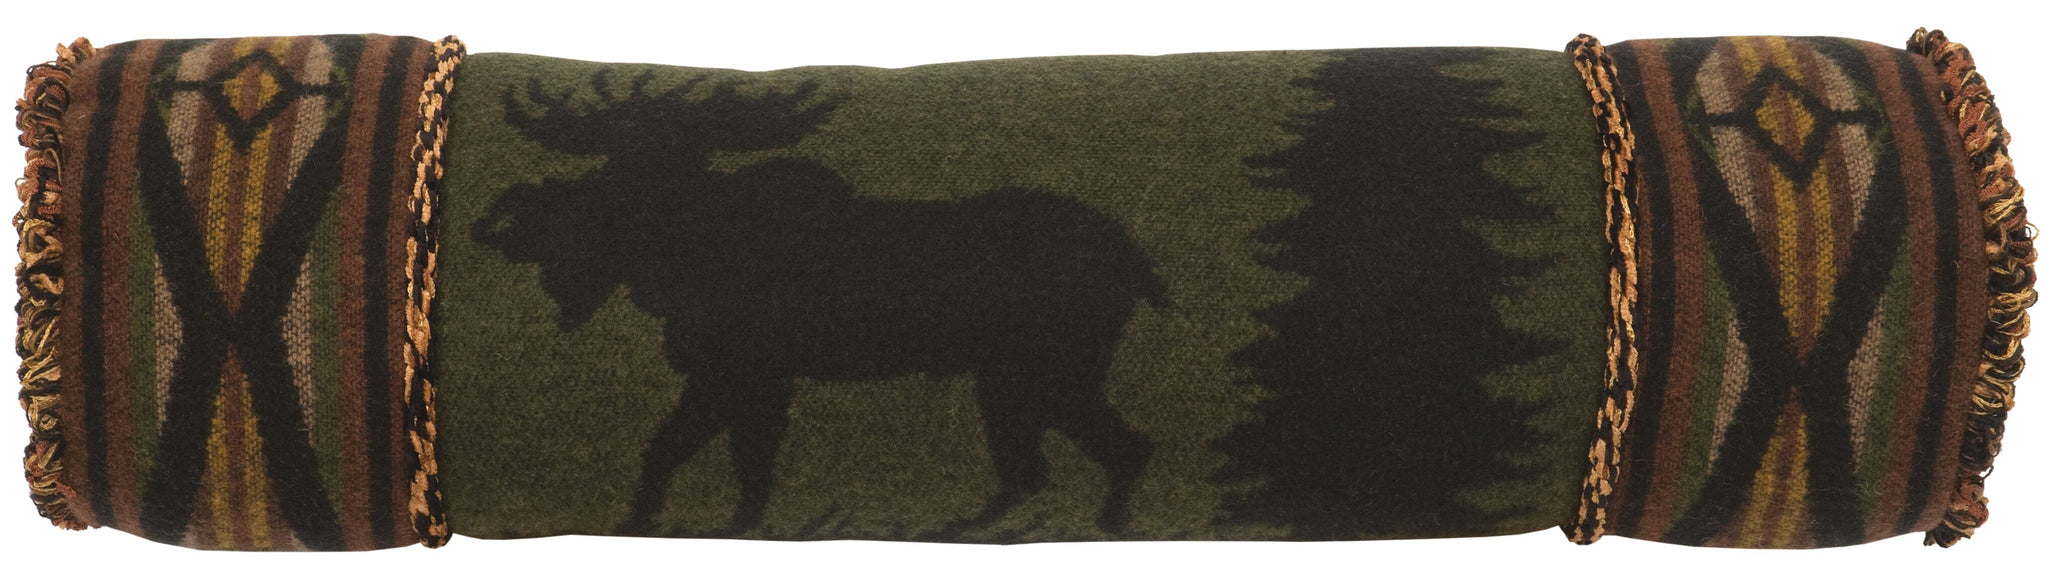 Moose 1 Neckroll Pillow Wooded River - Unique Linens Online